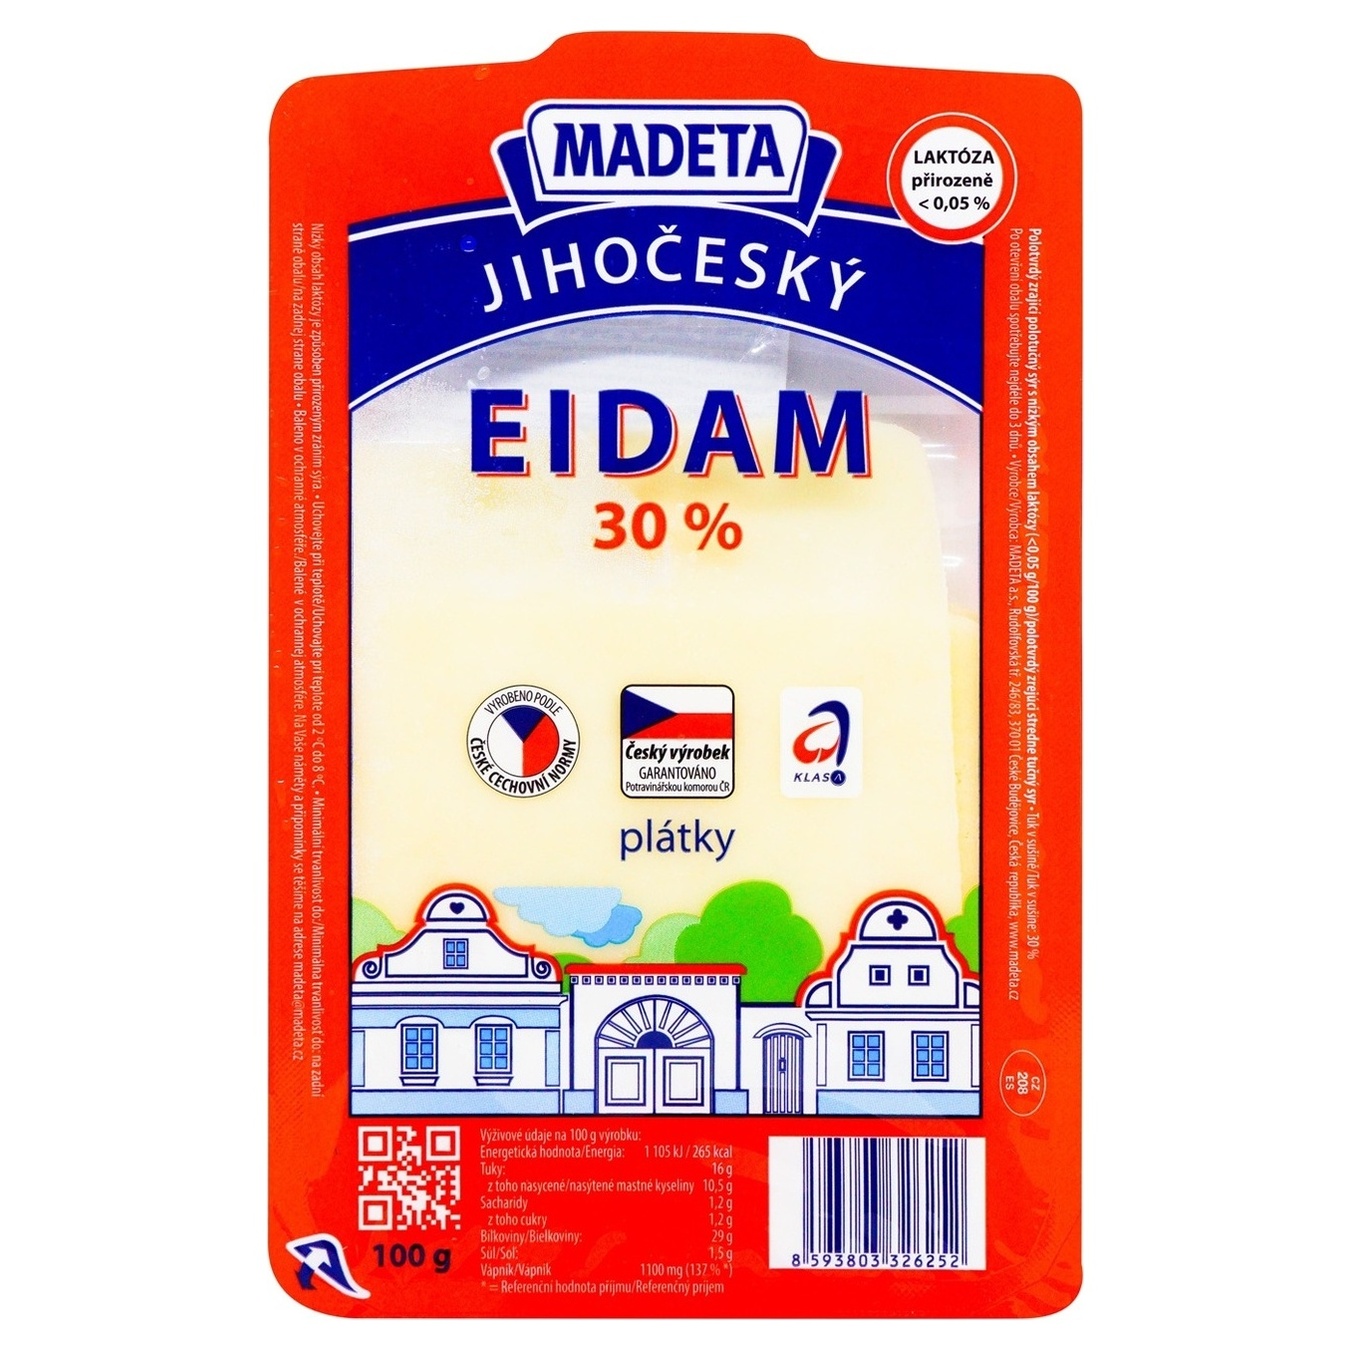 Edam Madeta cheese sliced 30% 100g